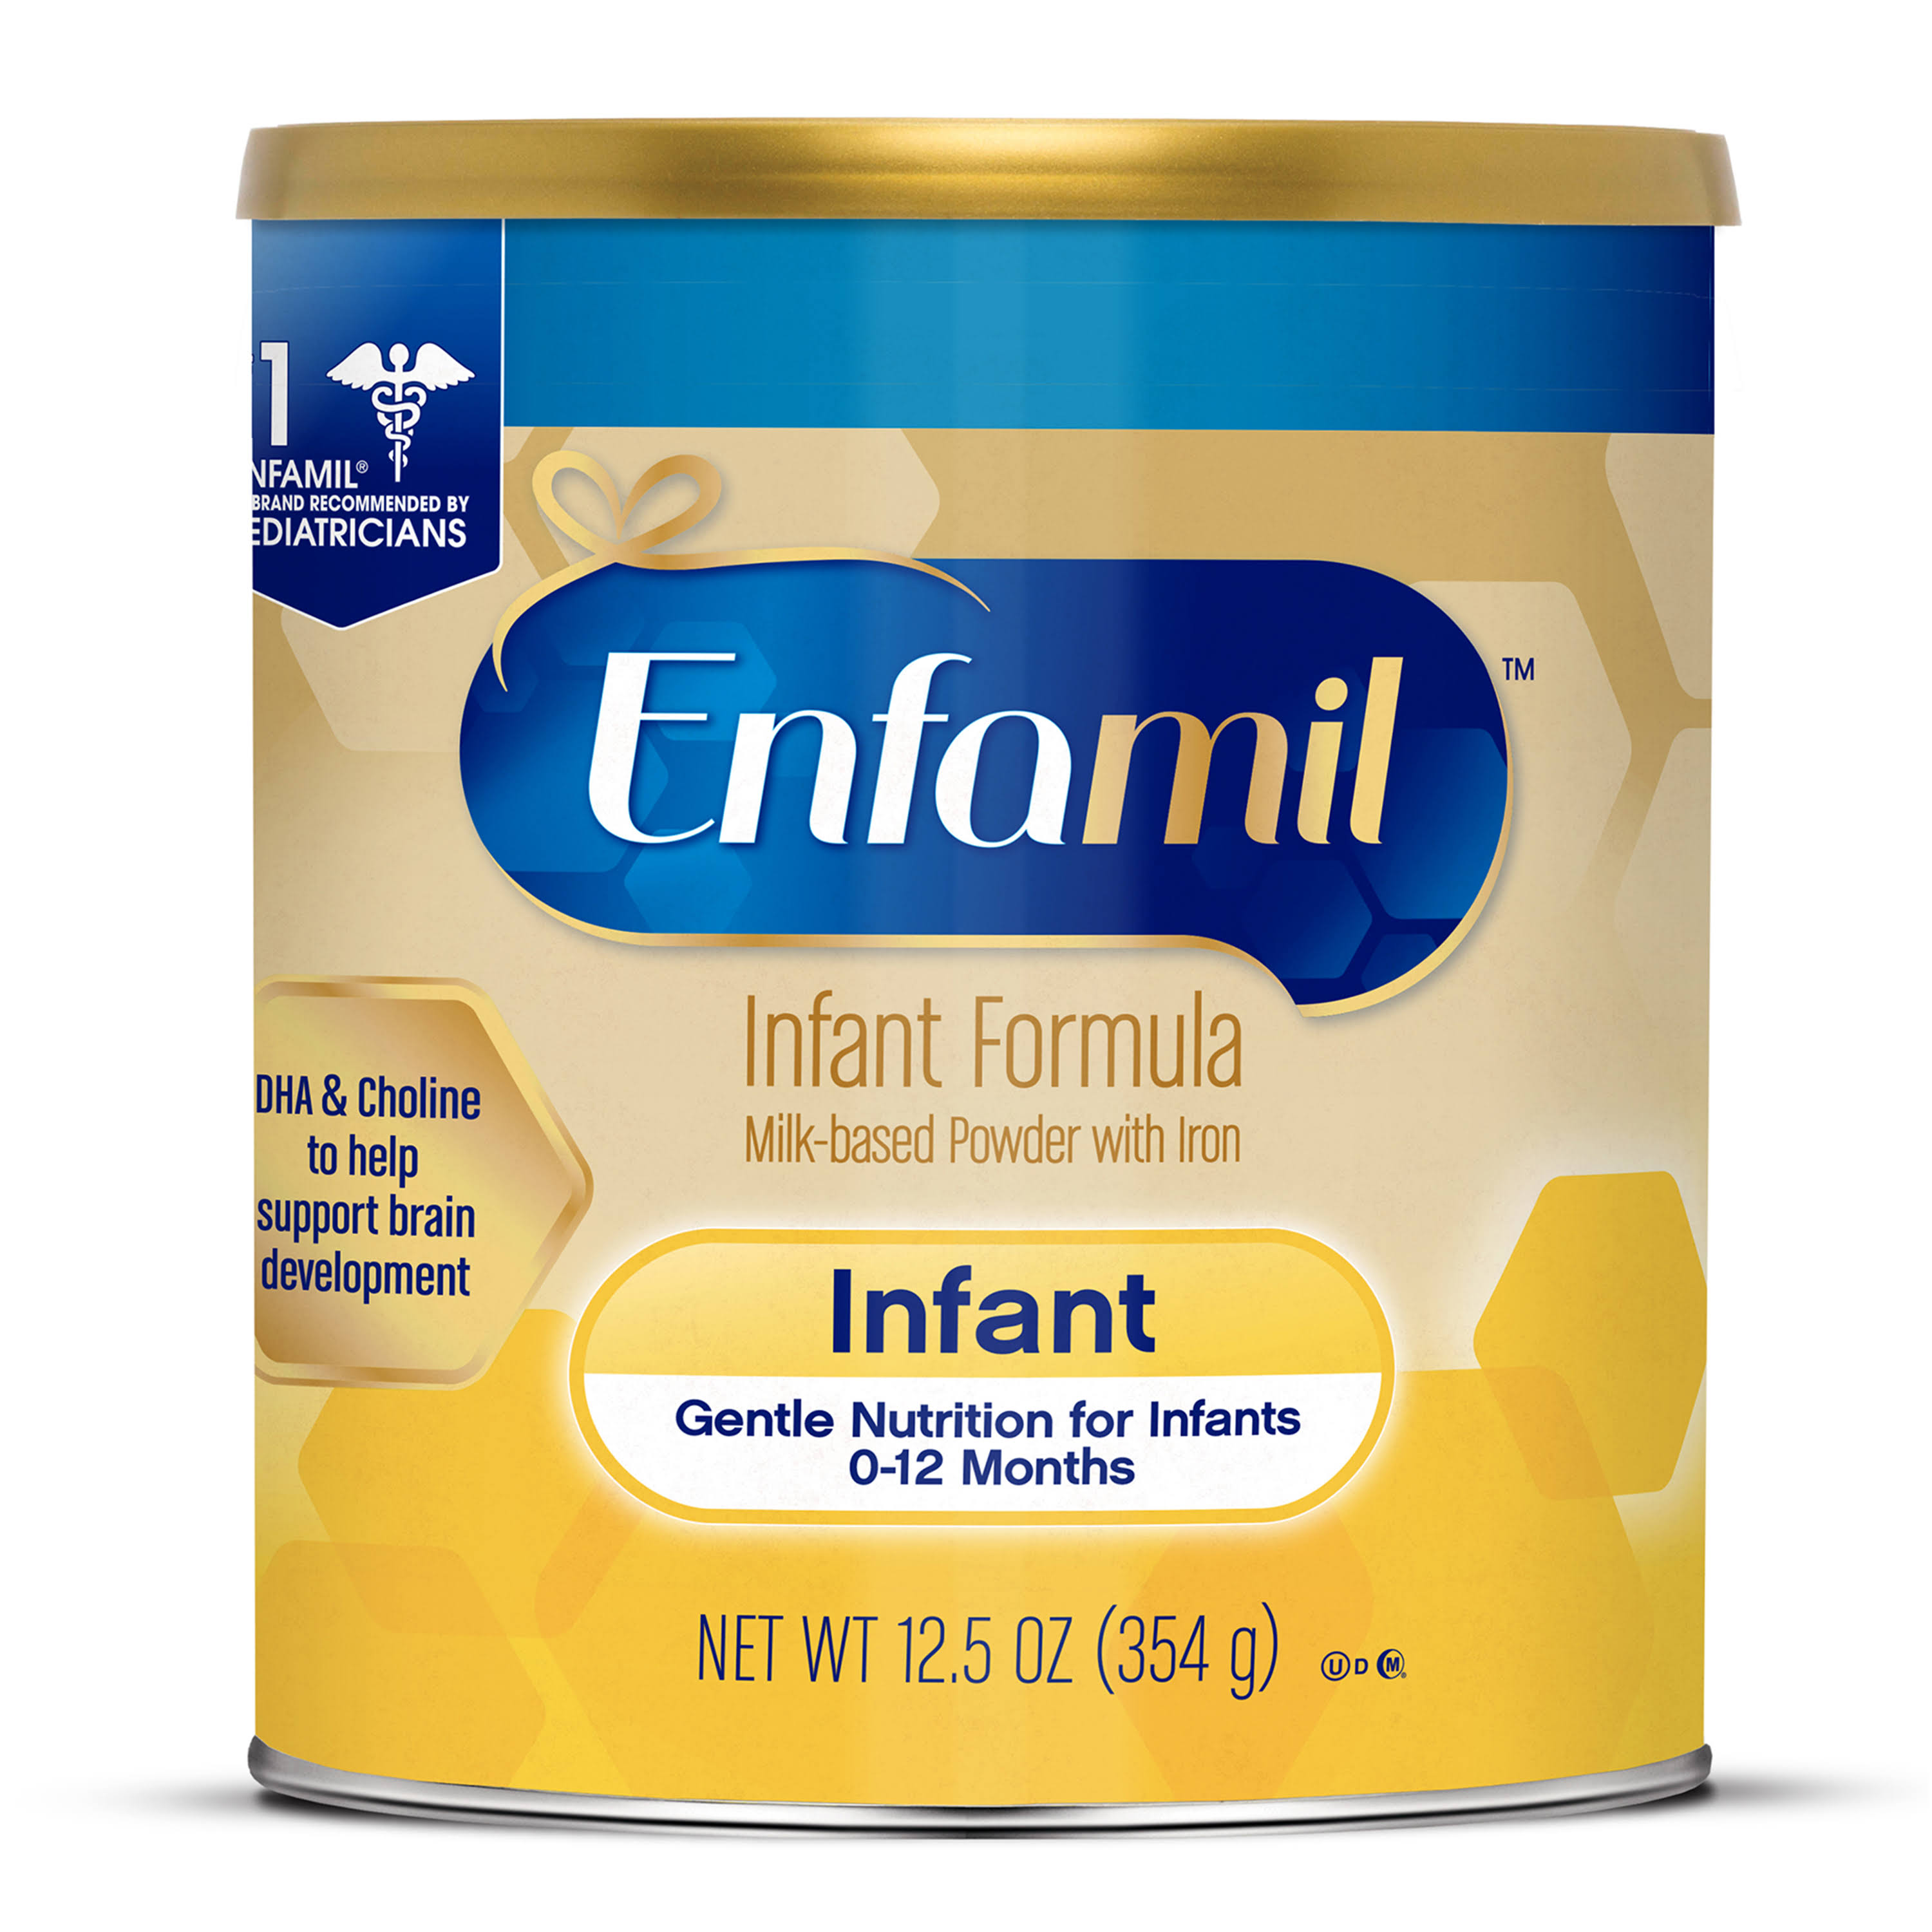 Enfamil Milk-Based Powder with Iron Infant Formula - 0-12 Months, 12.5oz